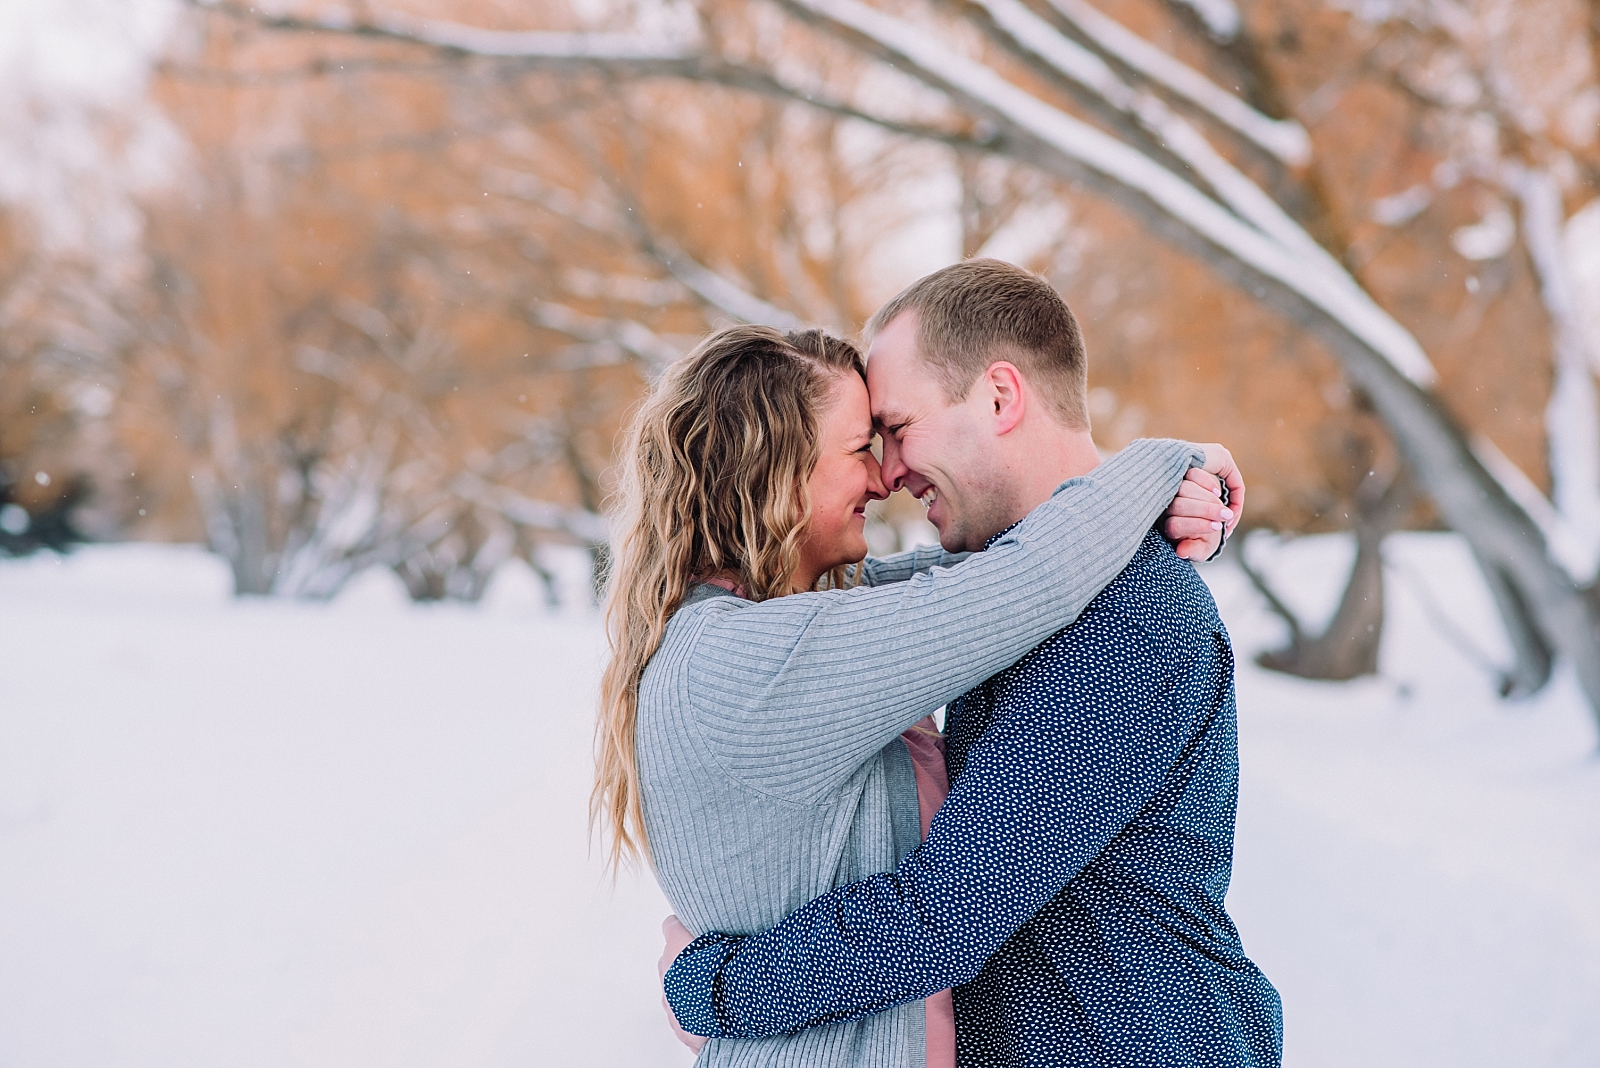 engaged couple hugging and cuddling on snowy bank with trees winter photos wedding photographer idaho falls freeman park